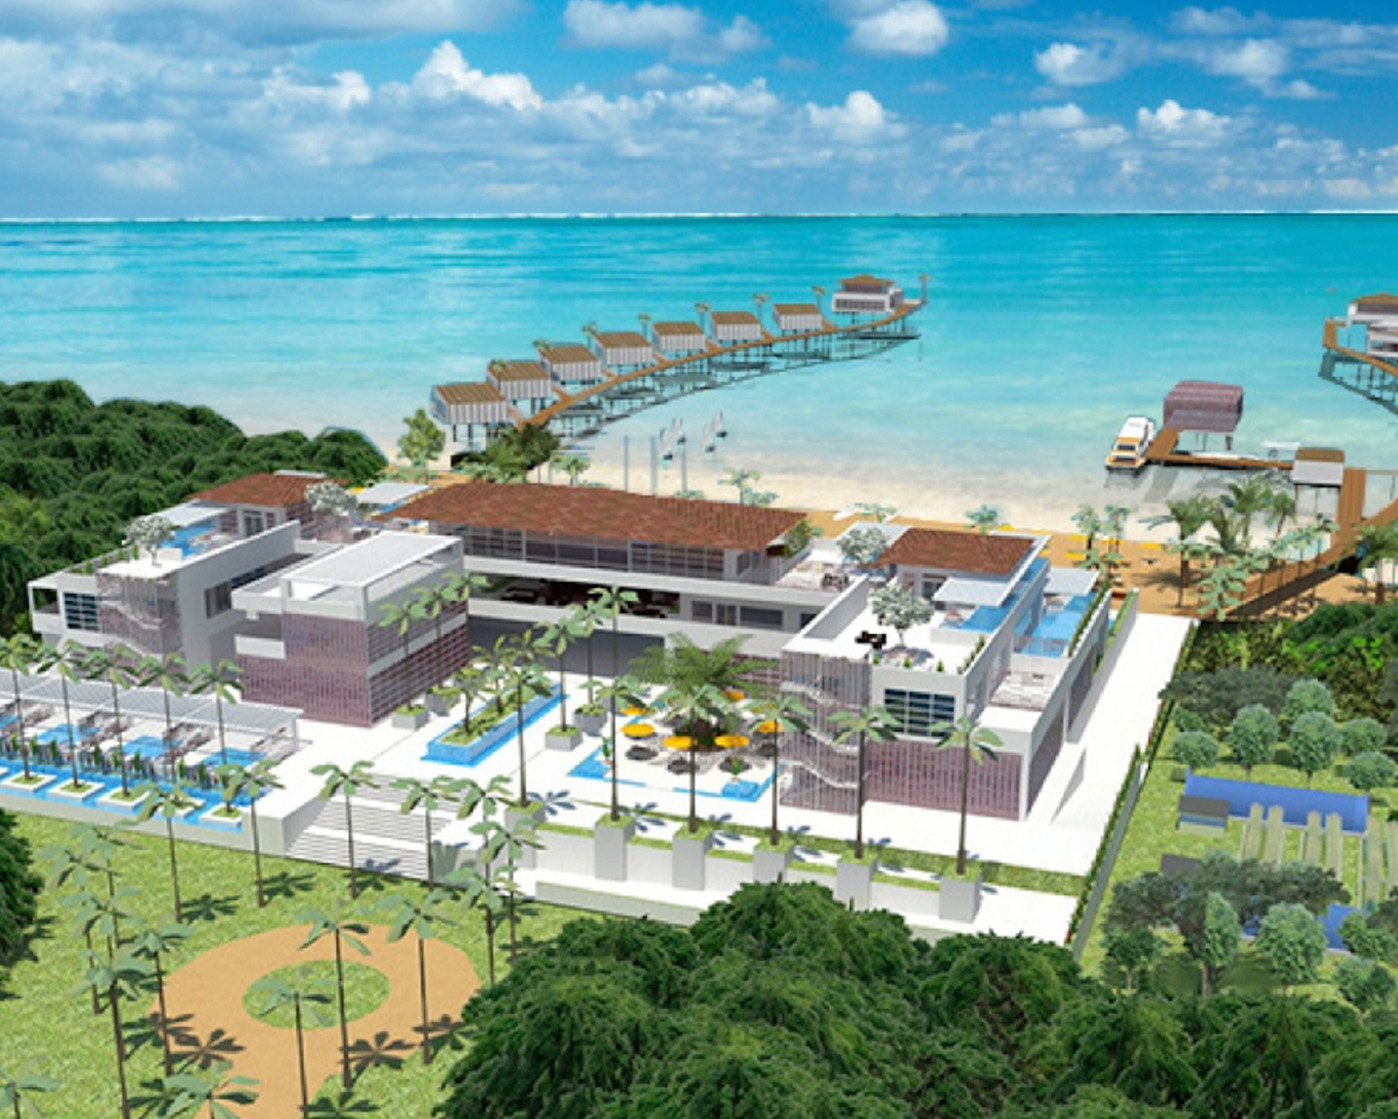 Image of resort mockup for a property in Belmopan, Belize.